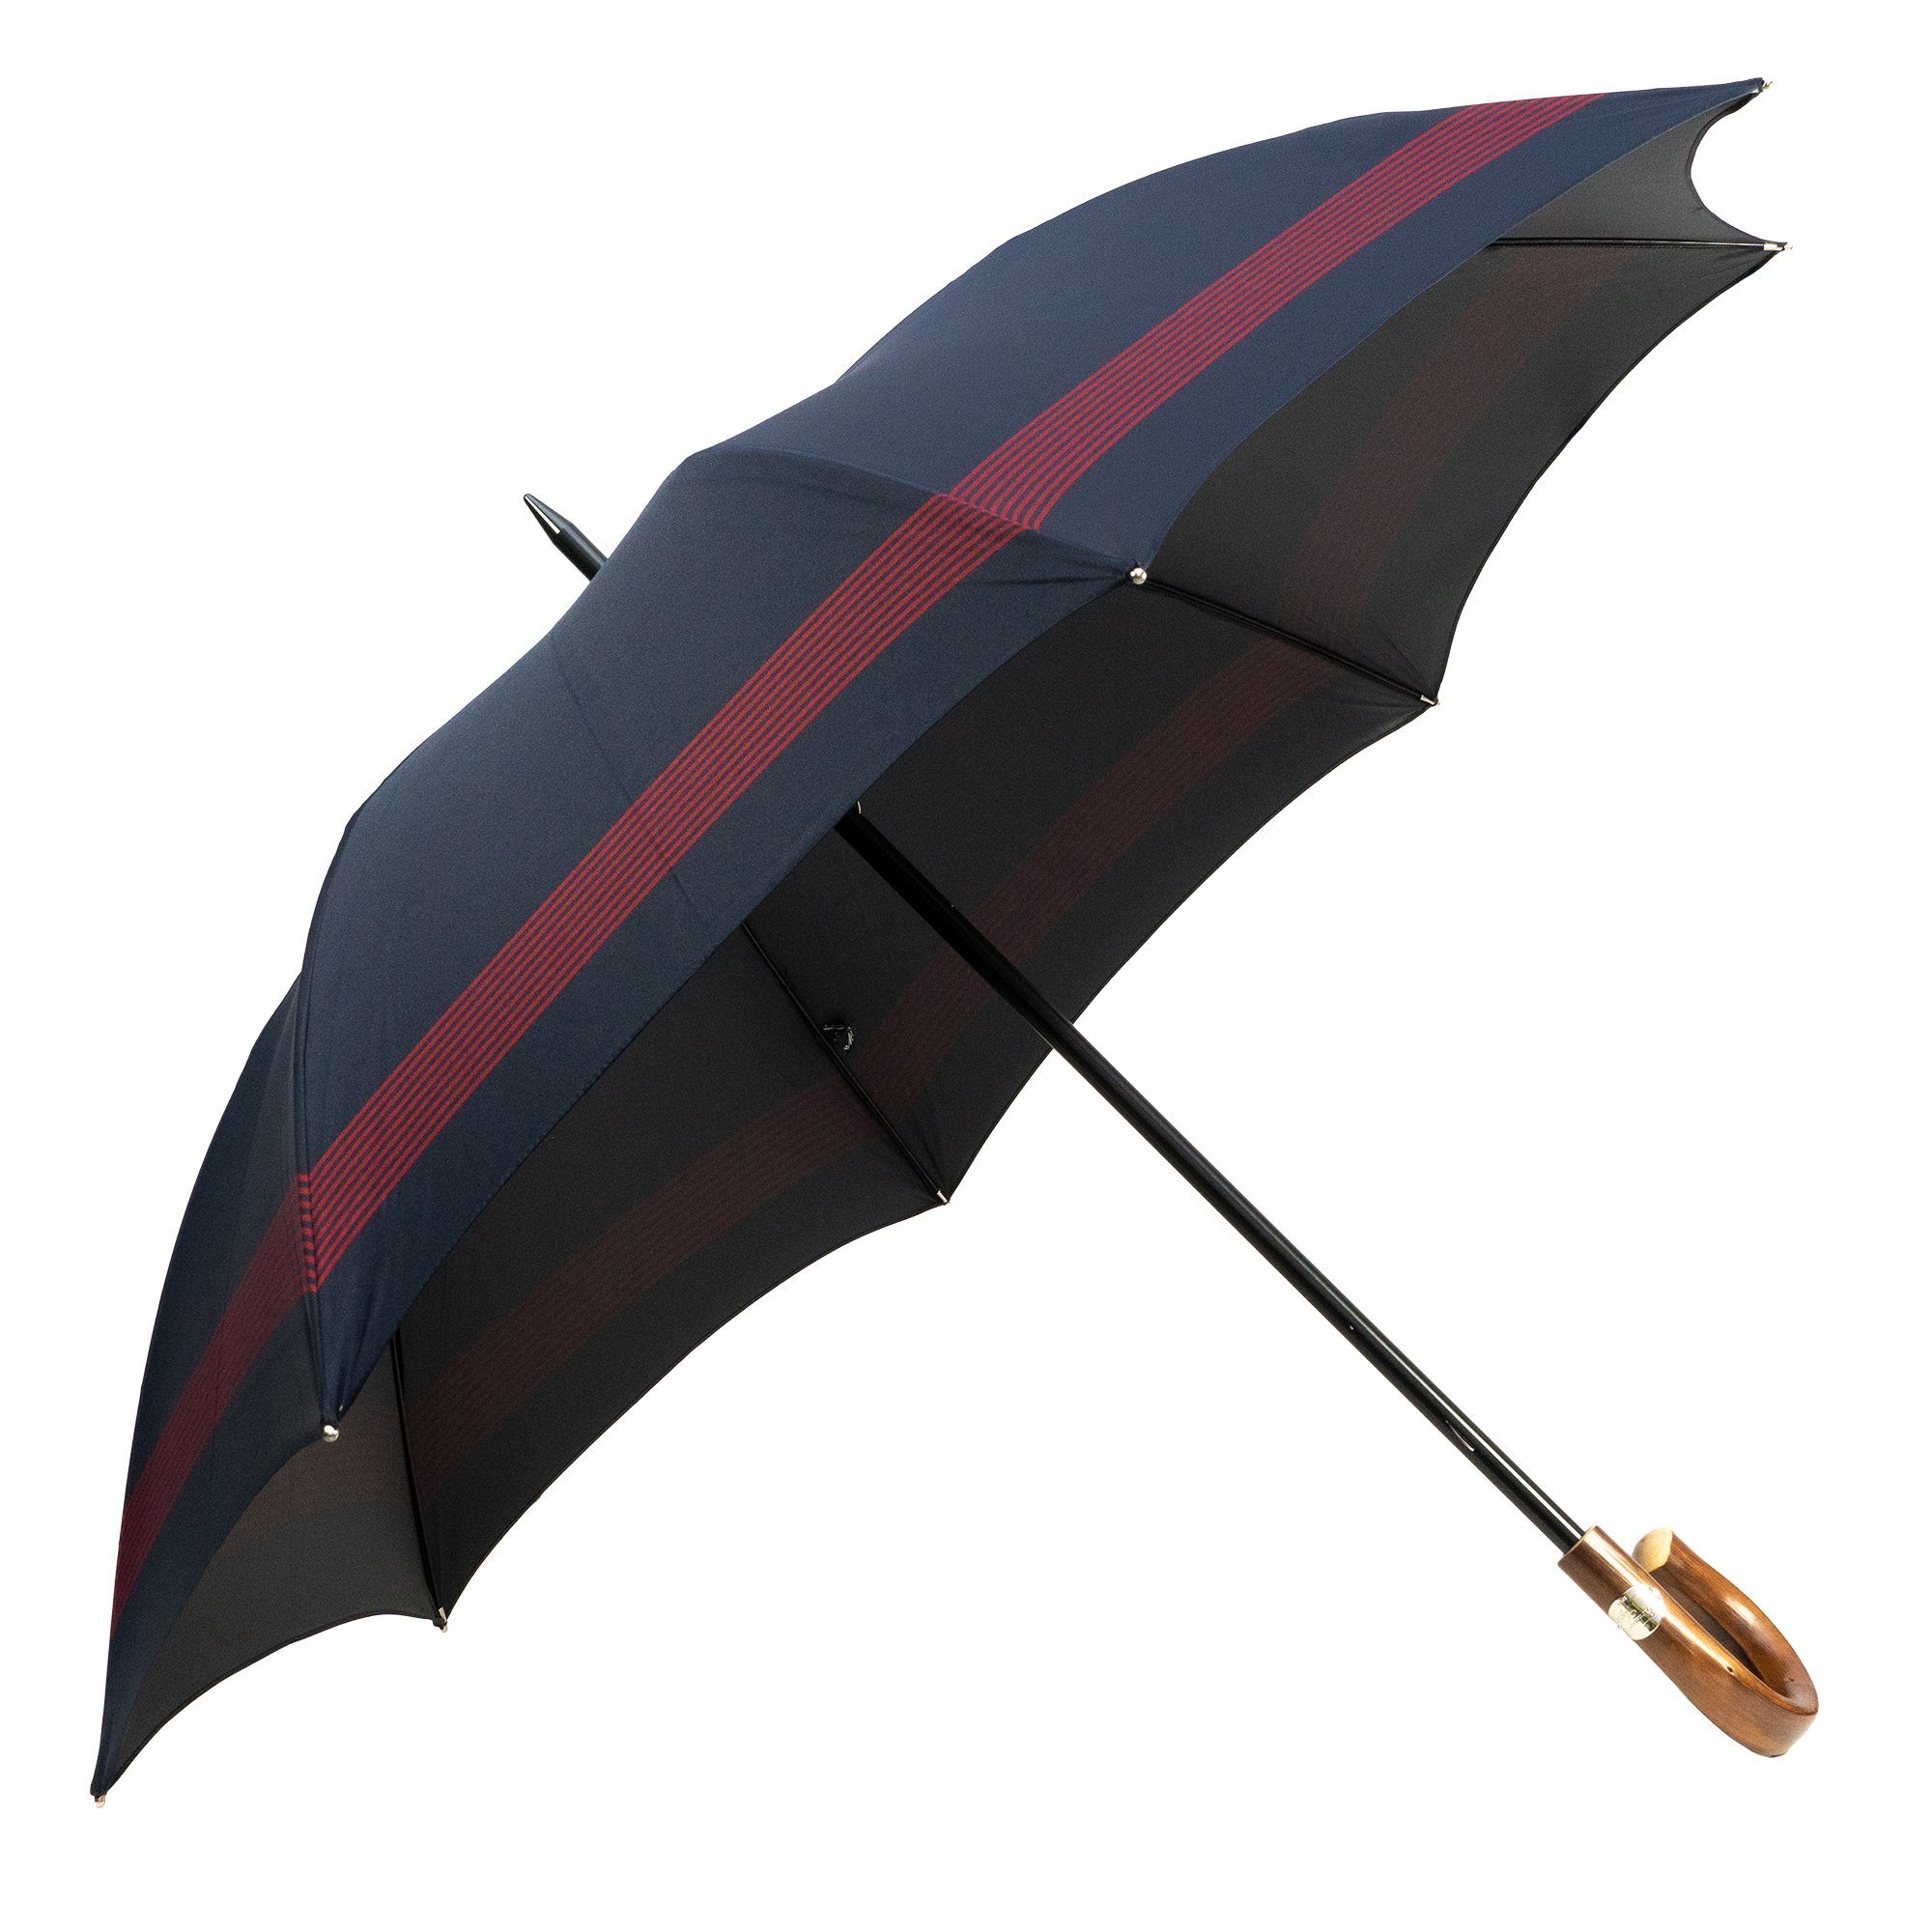 Francesco Maglia Stockregenschirm, Luxus-Regenschirm, dunkelblau mit roter  Streifenumrandung, Handmade in Italy online kaufen | OTTO